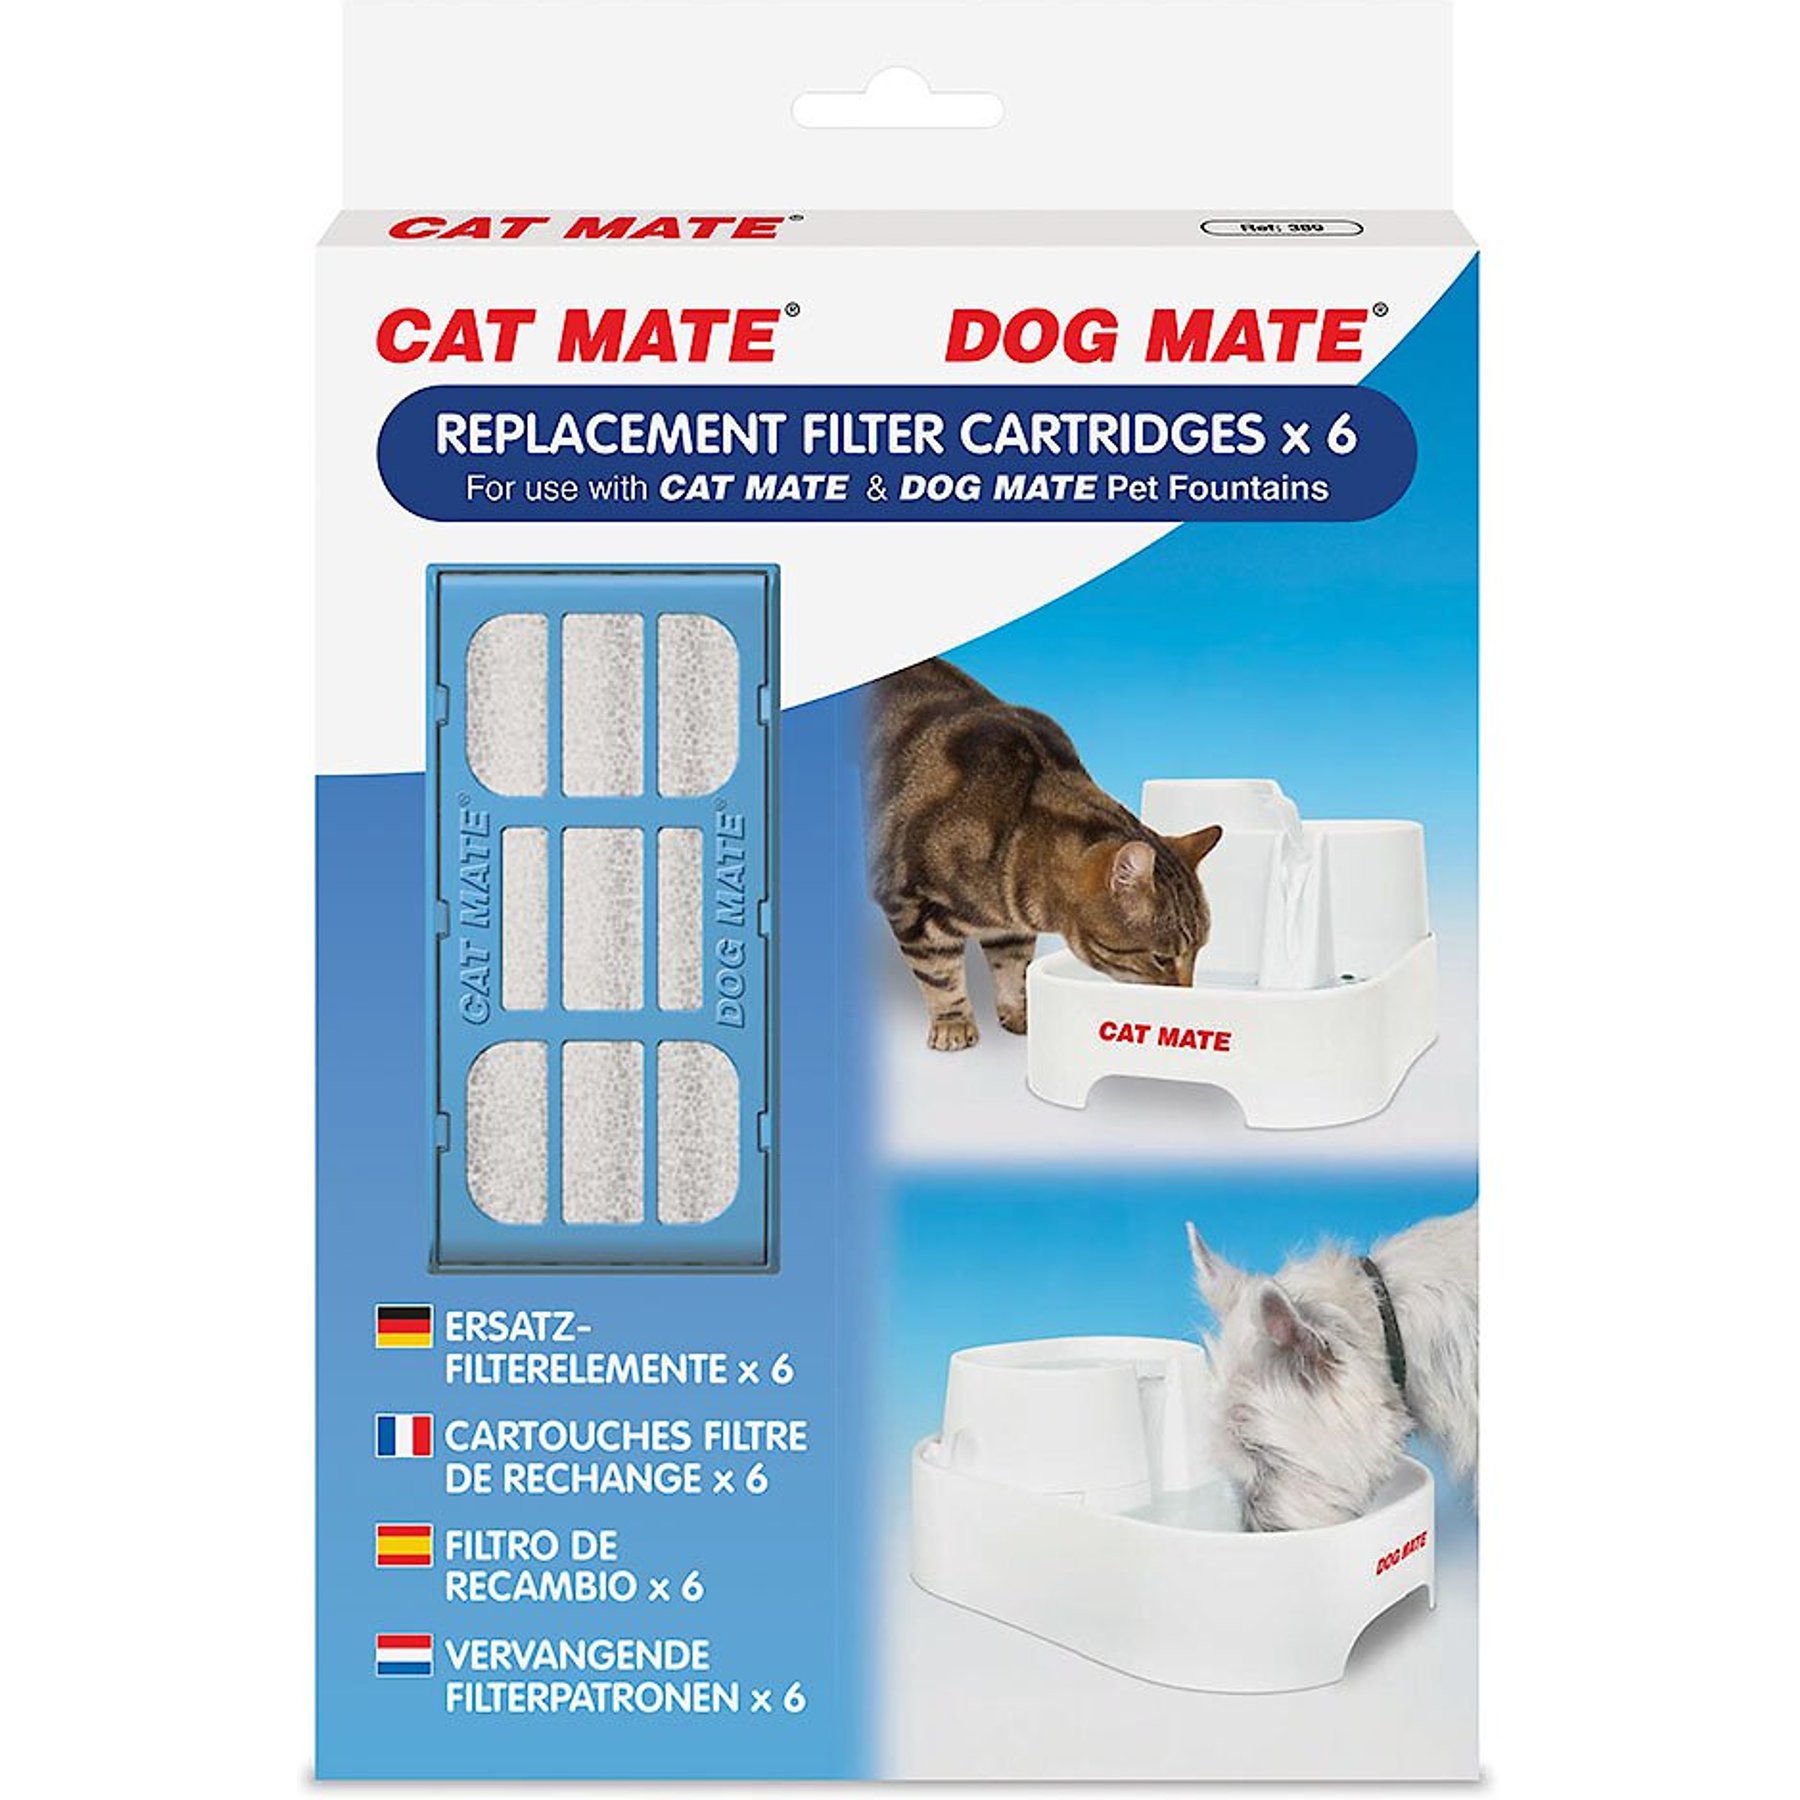 CAT MATE Replacement Filter Cartridges for Cat Mate & Dog Mate